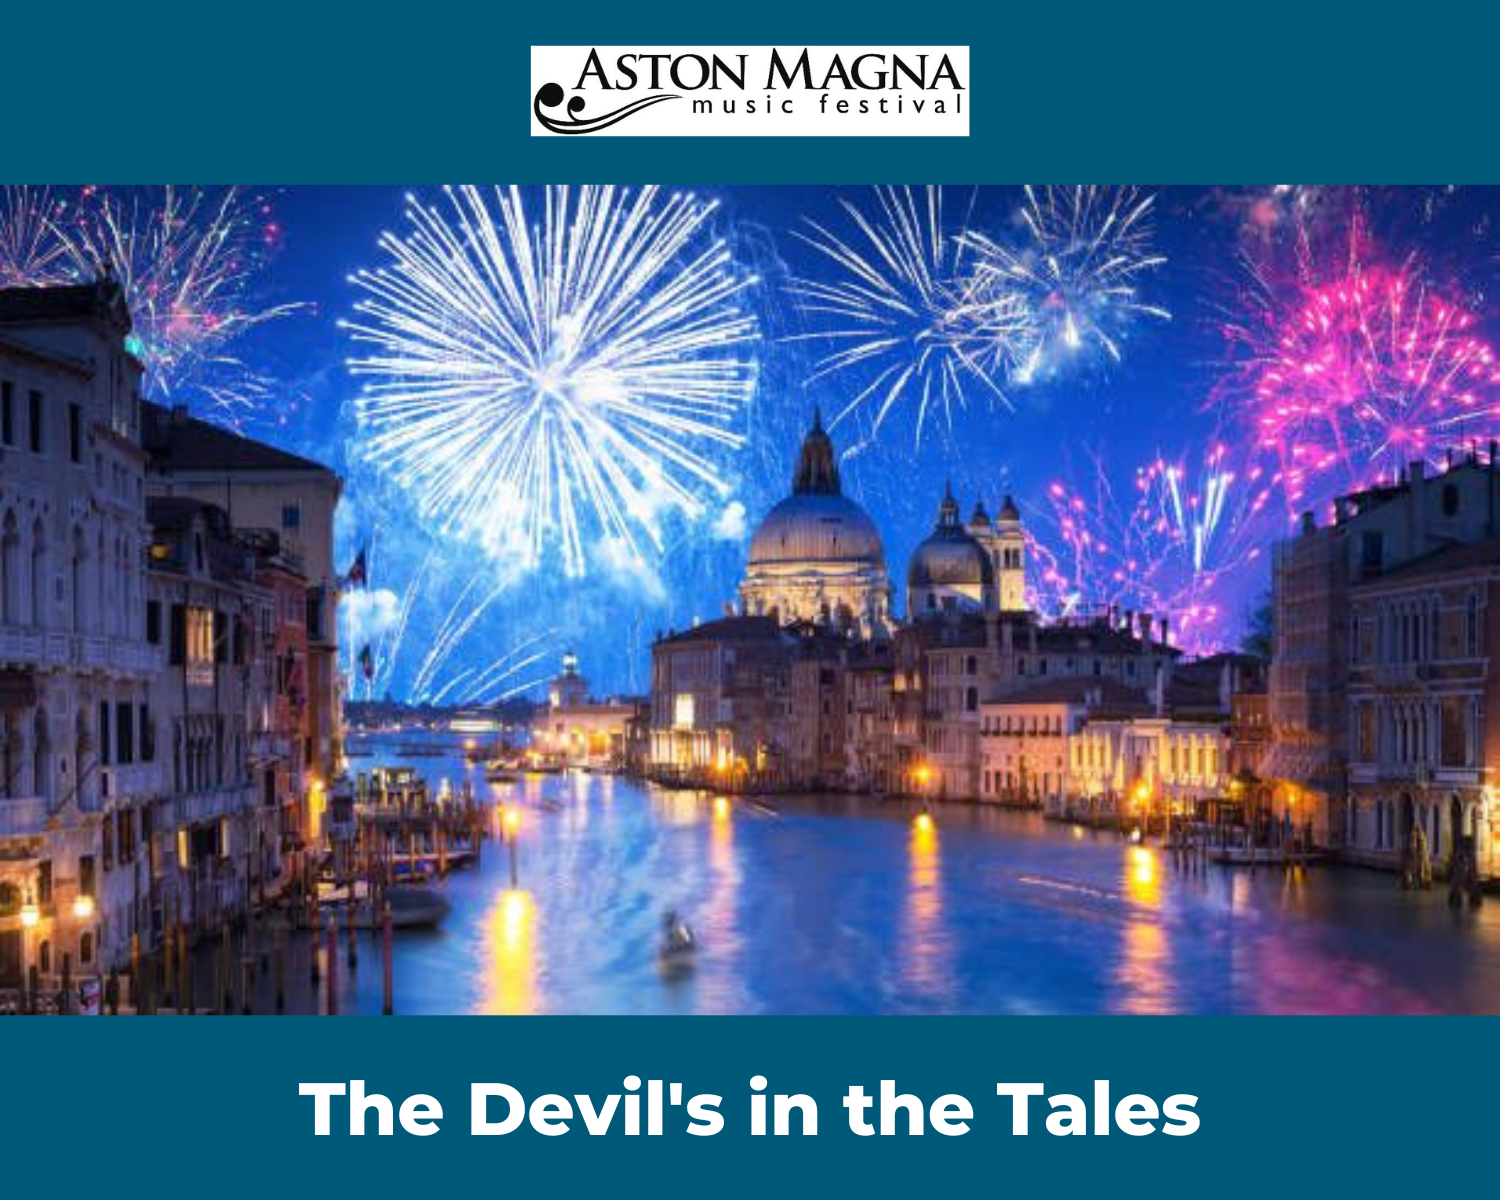 Aston Magna: The Devil's in the Tales